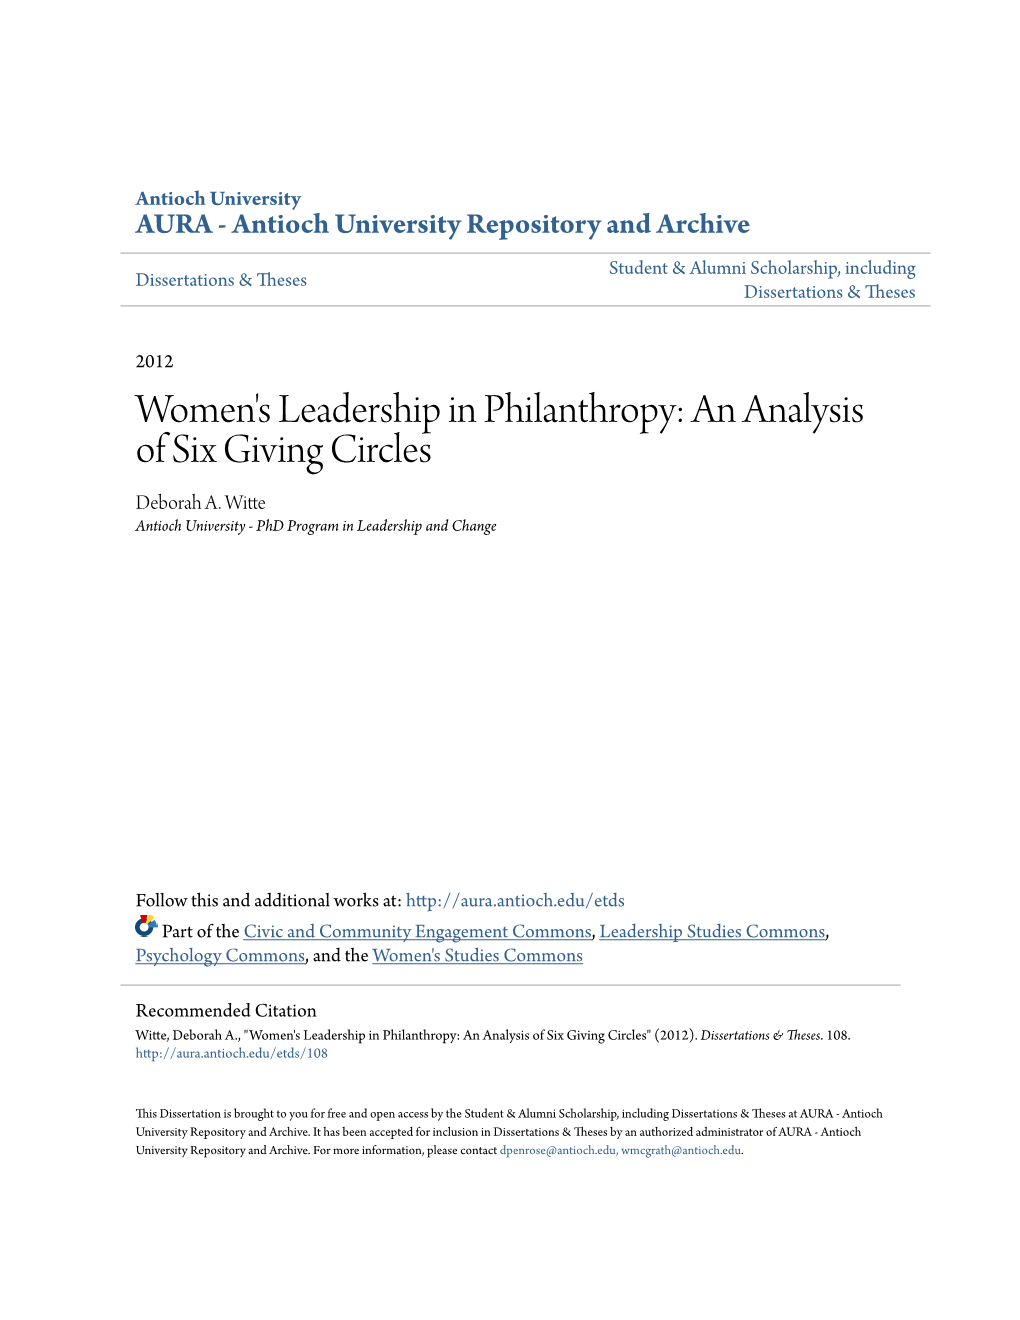 Women's Leadership in Philanthropy: an Analysis of Six Giving Circles Deborah A